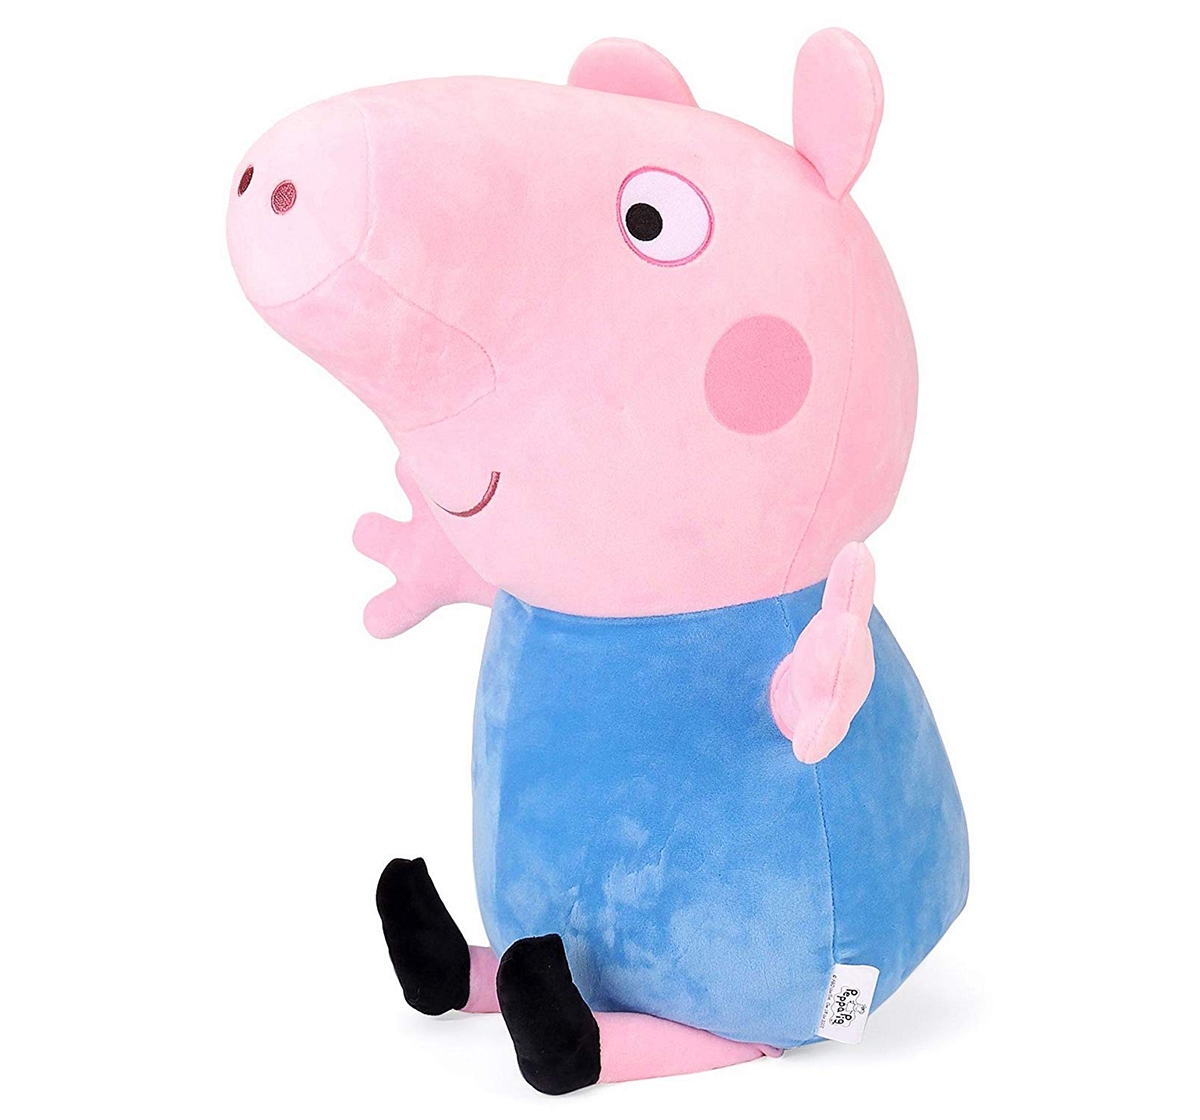 Peppa Pig | Peppa George Pig  Multi Color 46 Cm Soft Toy for Kids age 0M+ (Blue) 2